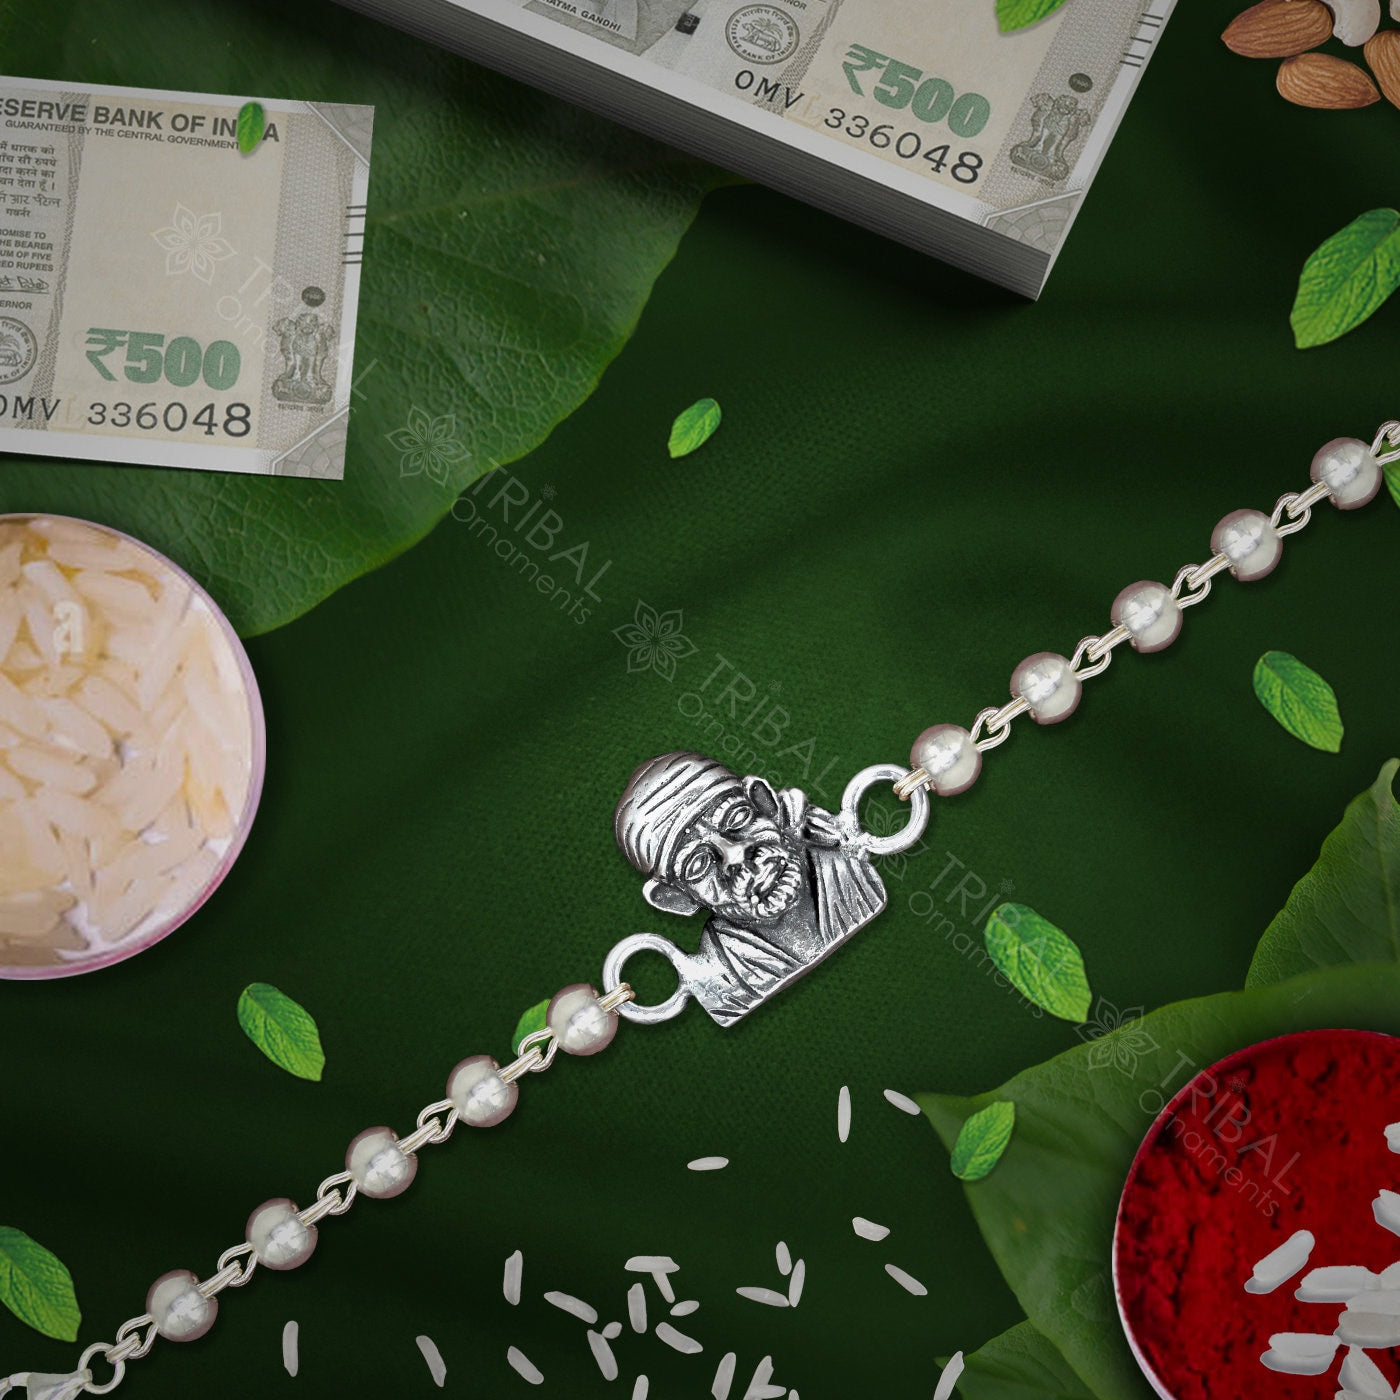 Copper Plated Alloy Sai Baba Bangle Bracelet Kada Open Ended Adjustable  Jewelry | eBay